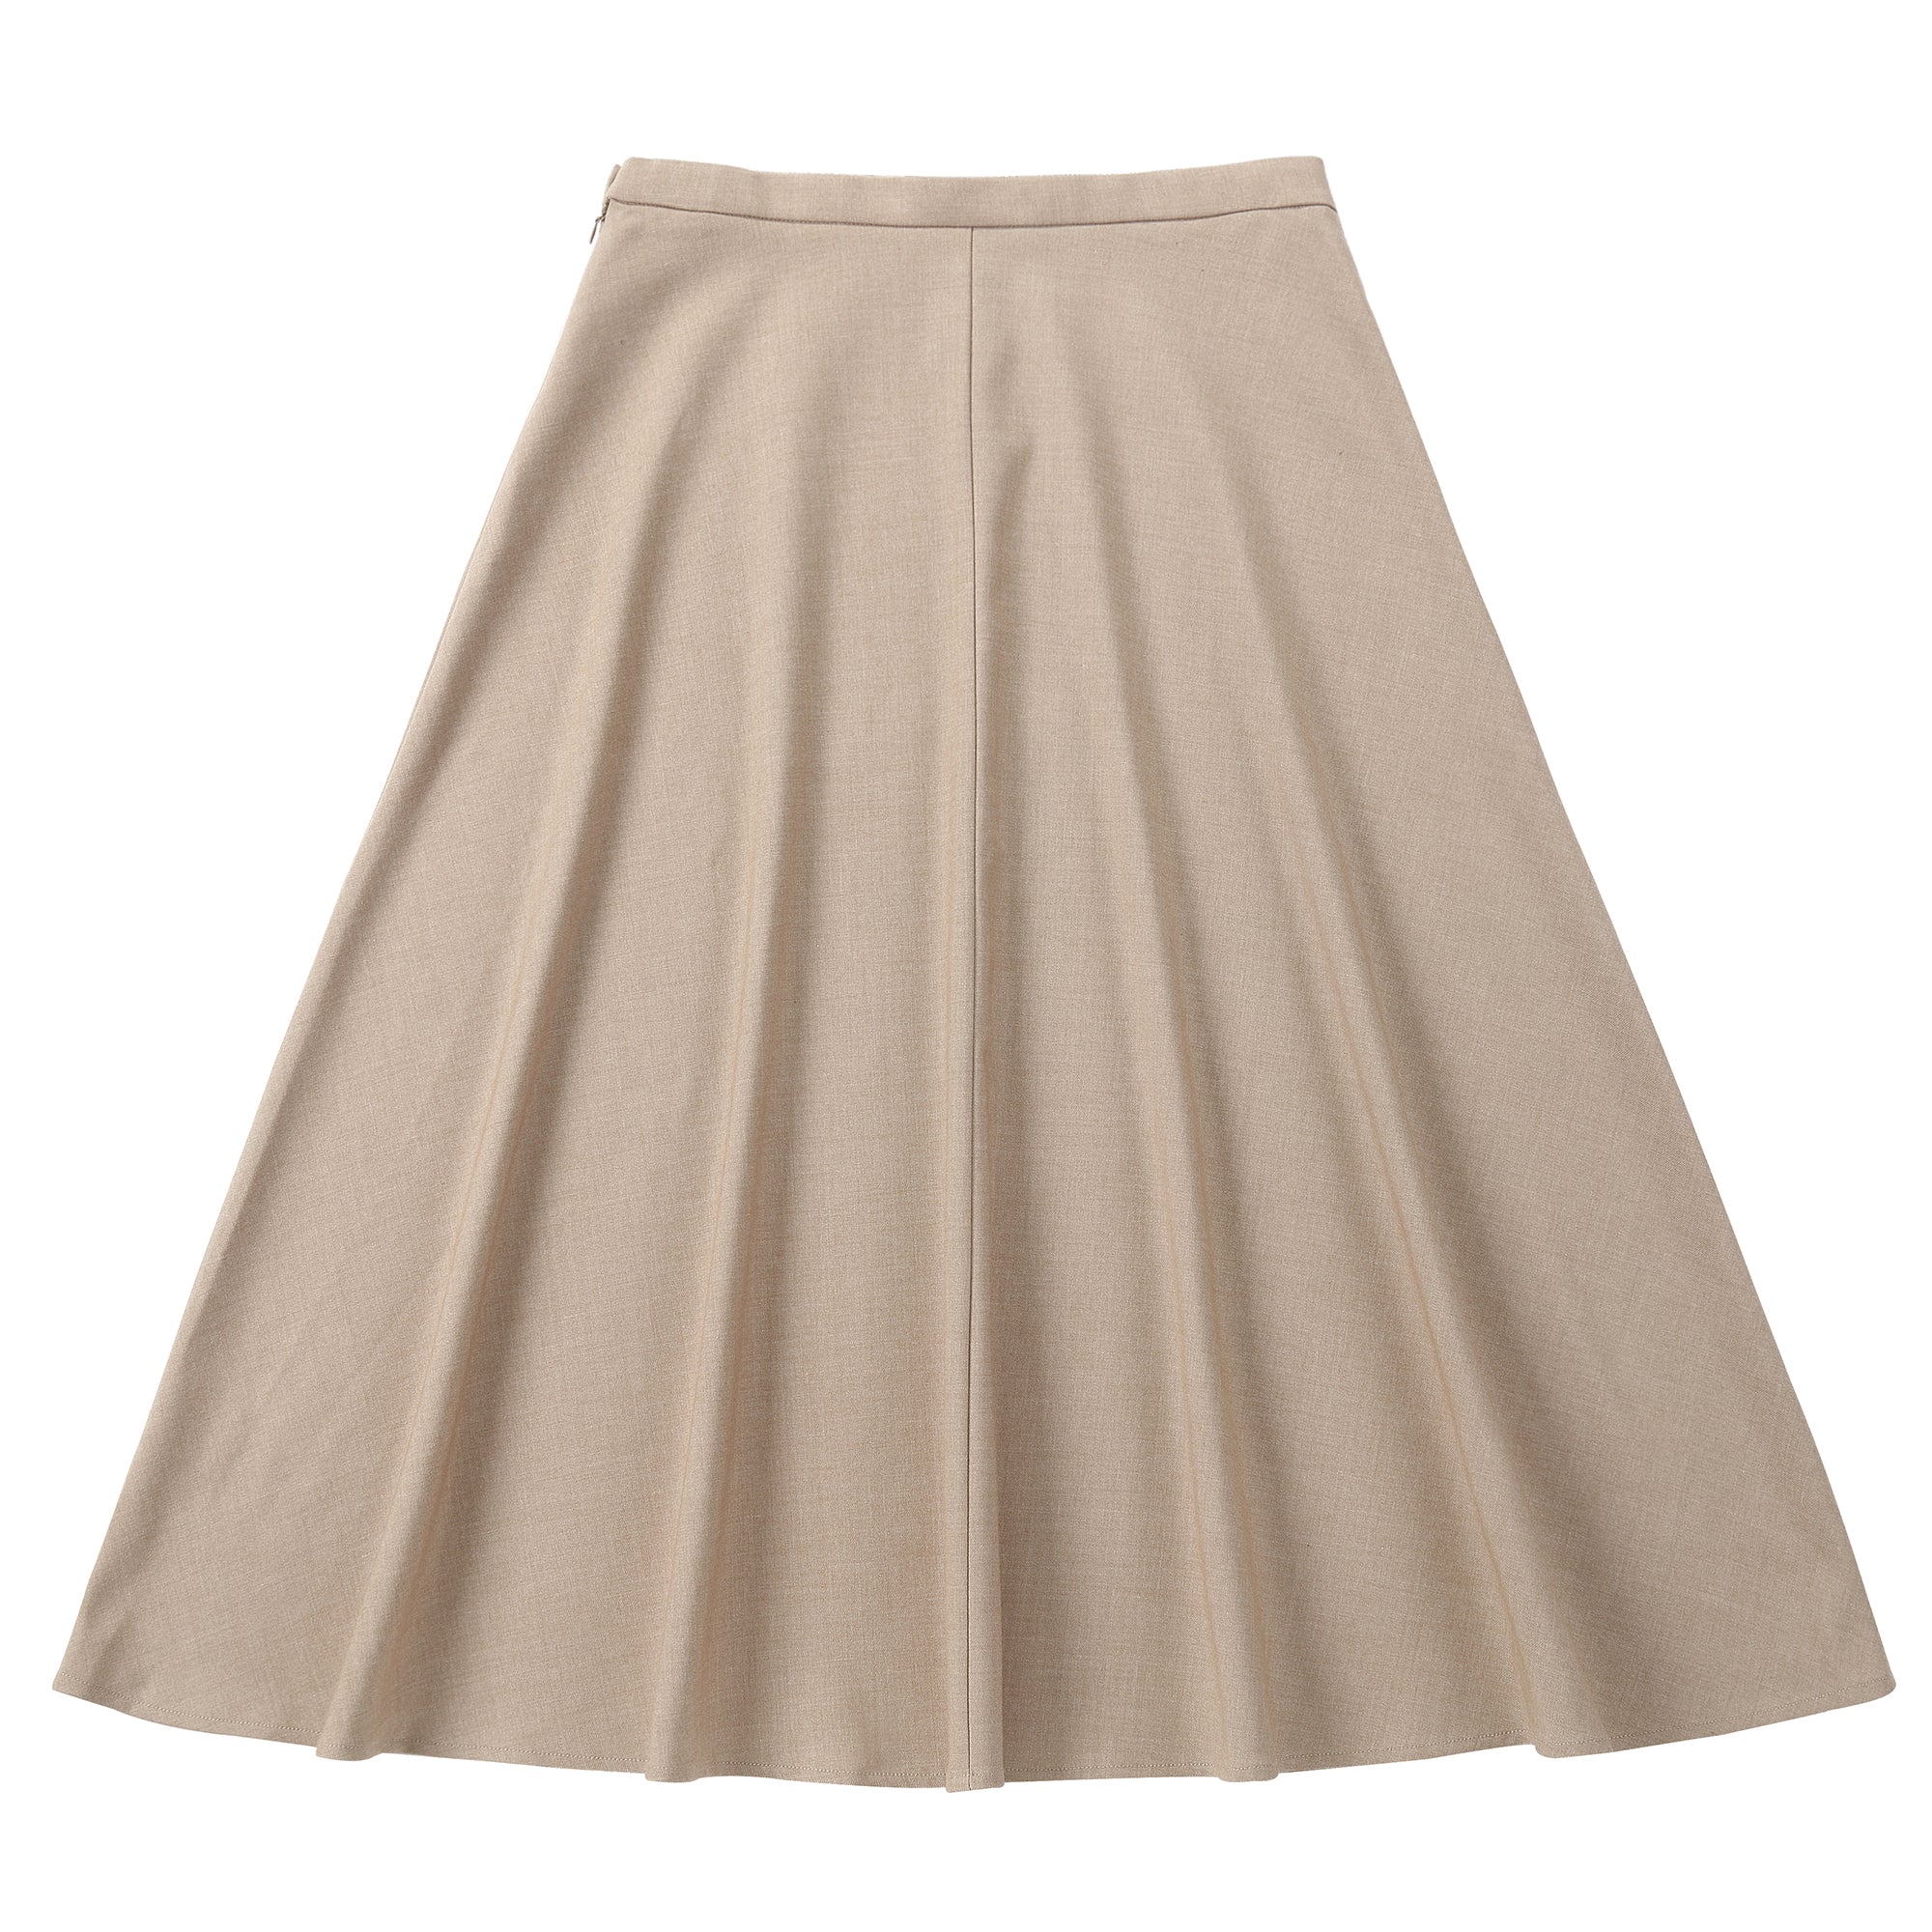 Tan Midi A-Line Skirt